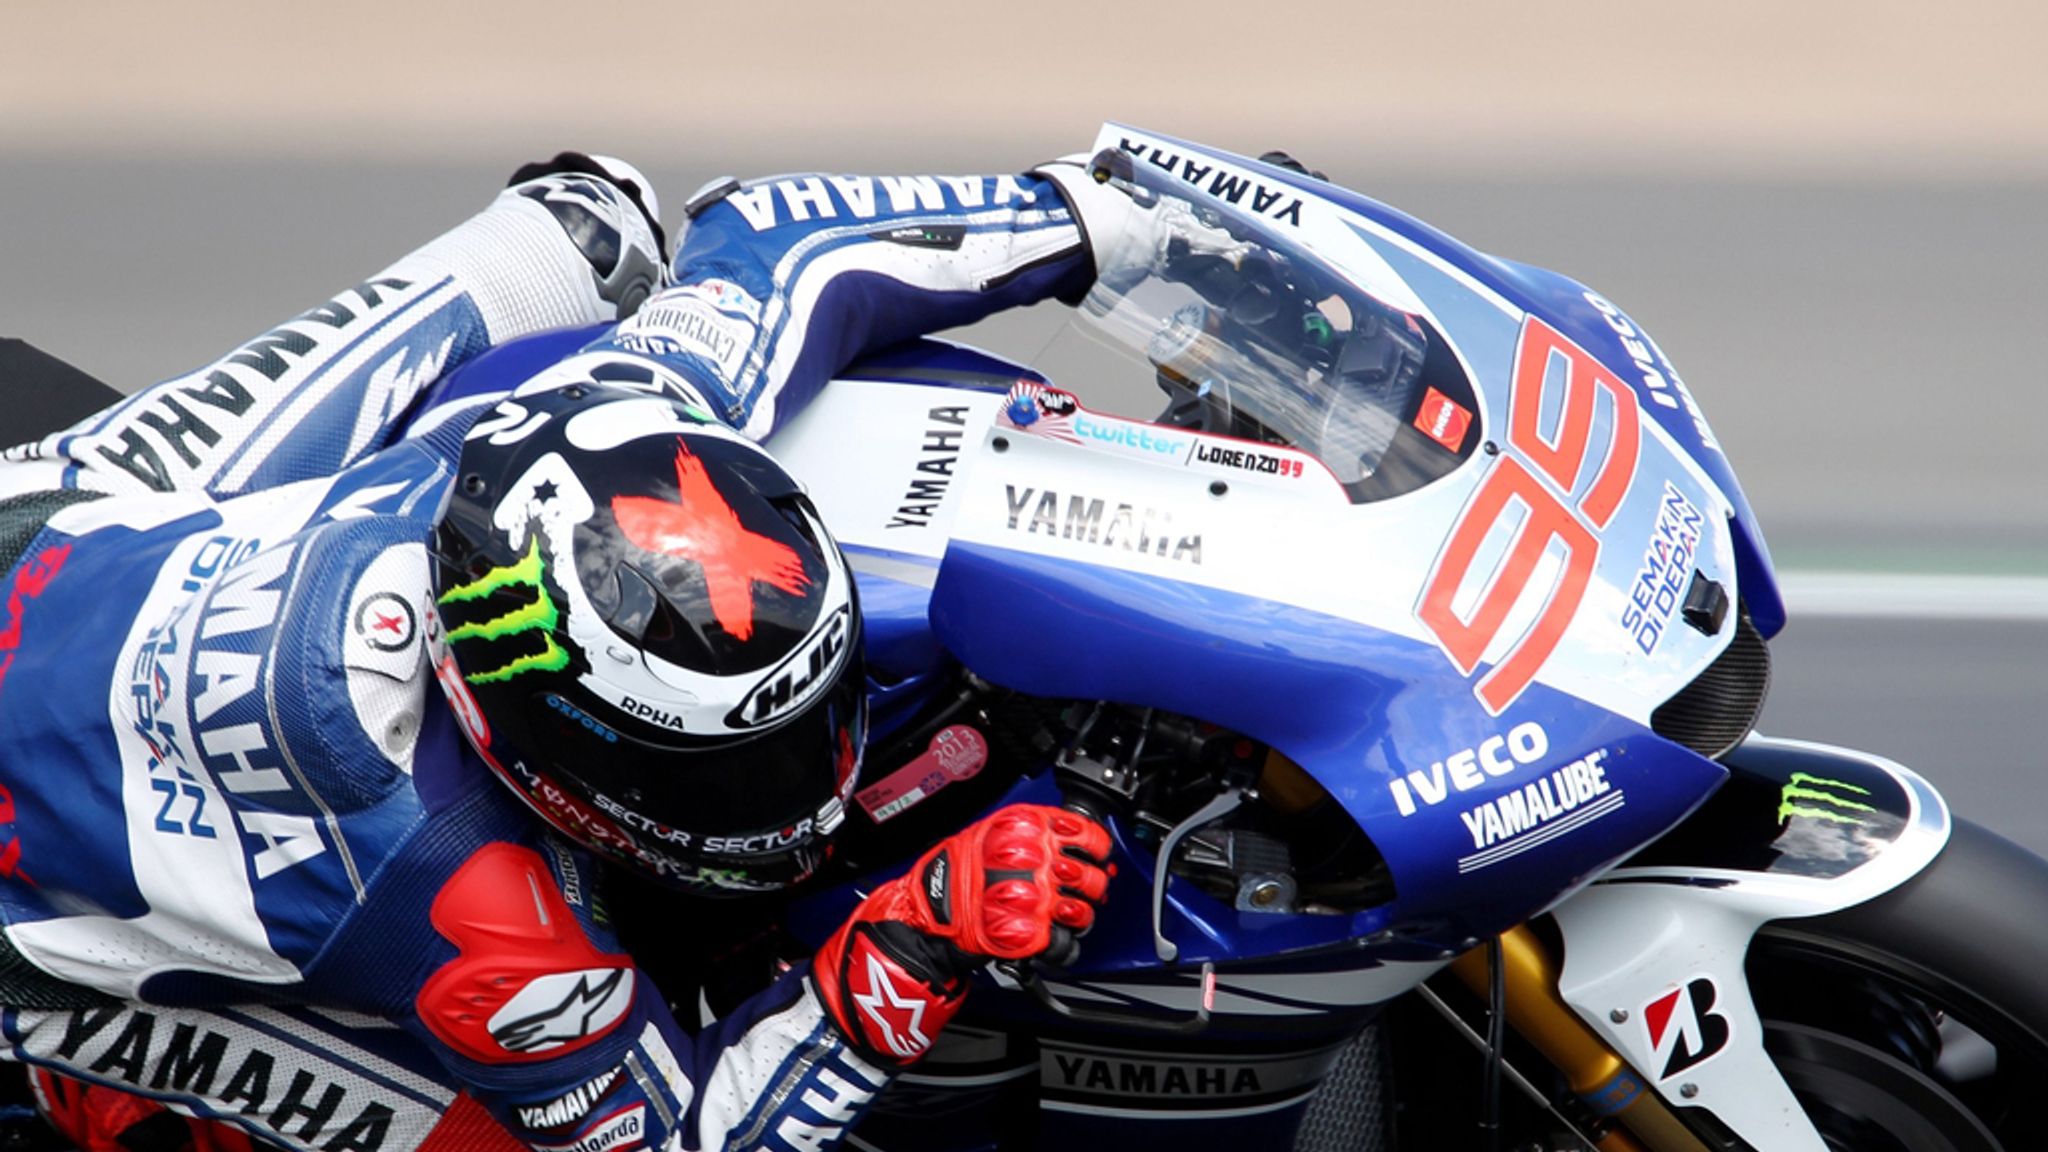 MotoGP Yamaha rider Jorge Lorenzo bids to shed weight ahead of new season Motor Racing News Sky Sports